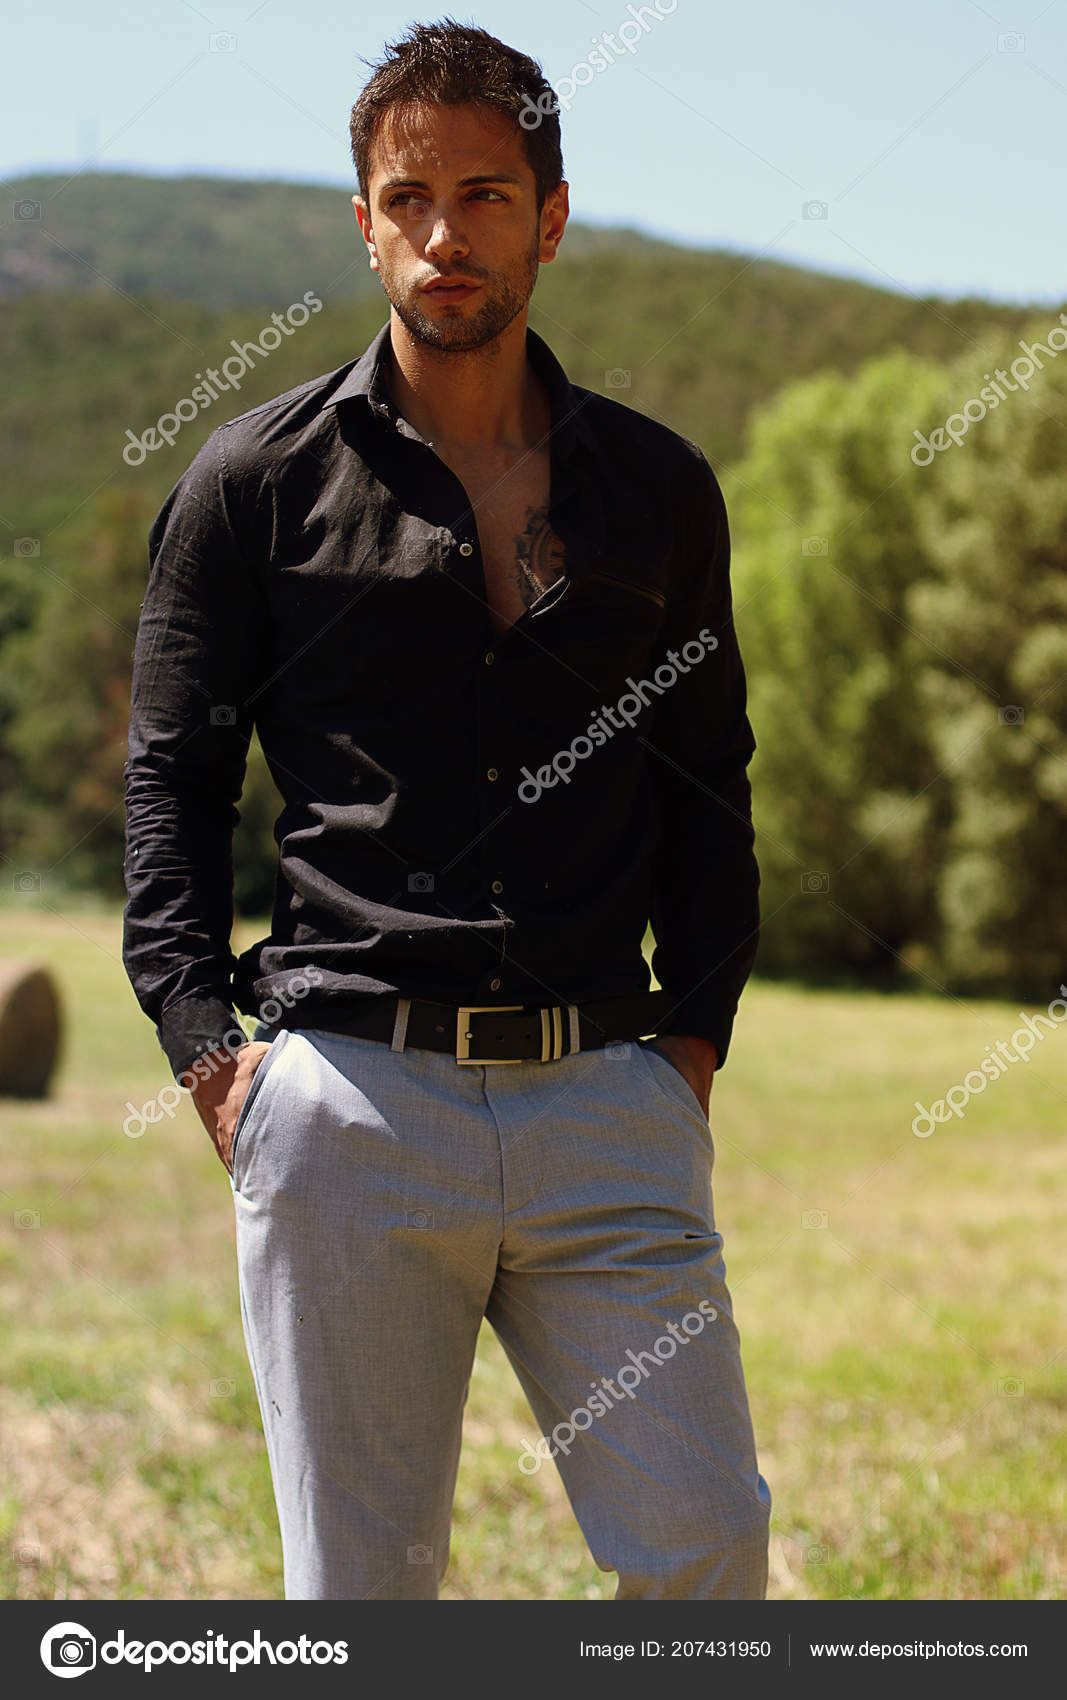 depositphotos 207431950 stock photo portrait elegant man suit outdoors